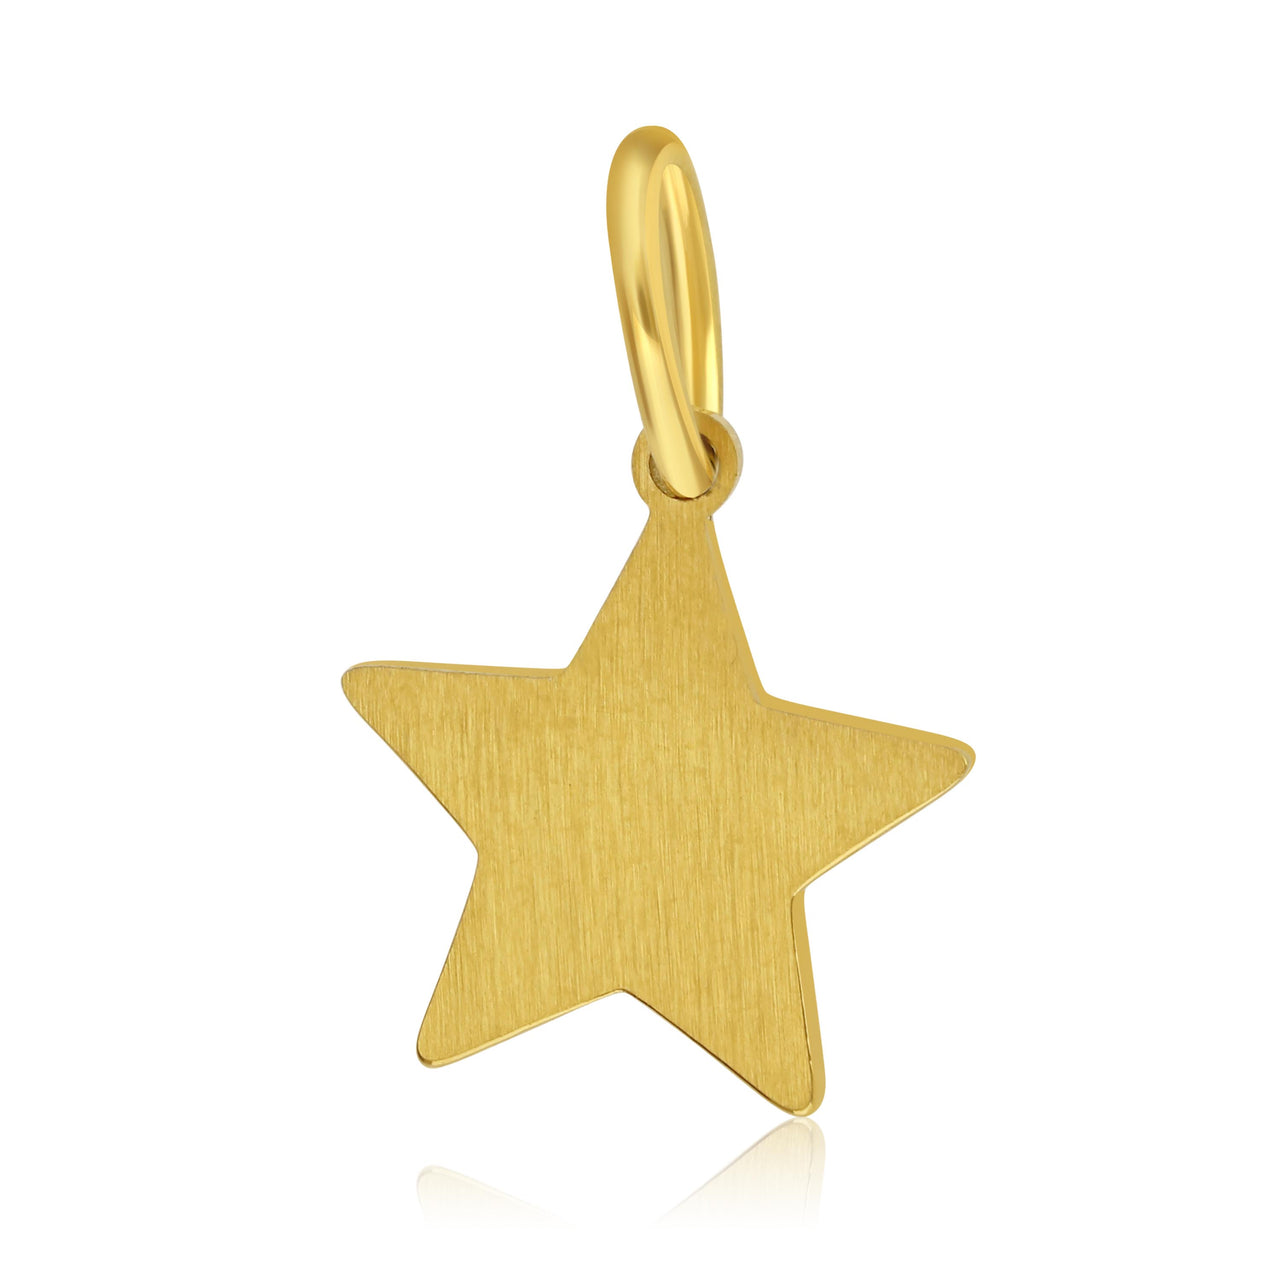 Gold Star charm